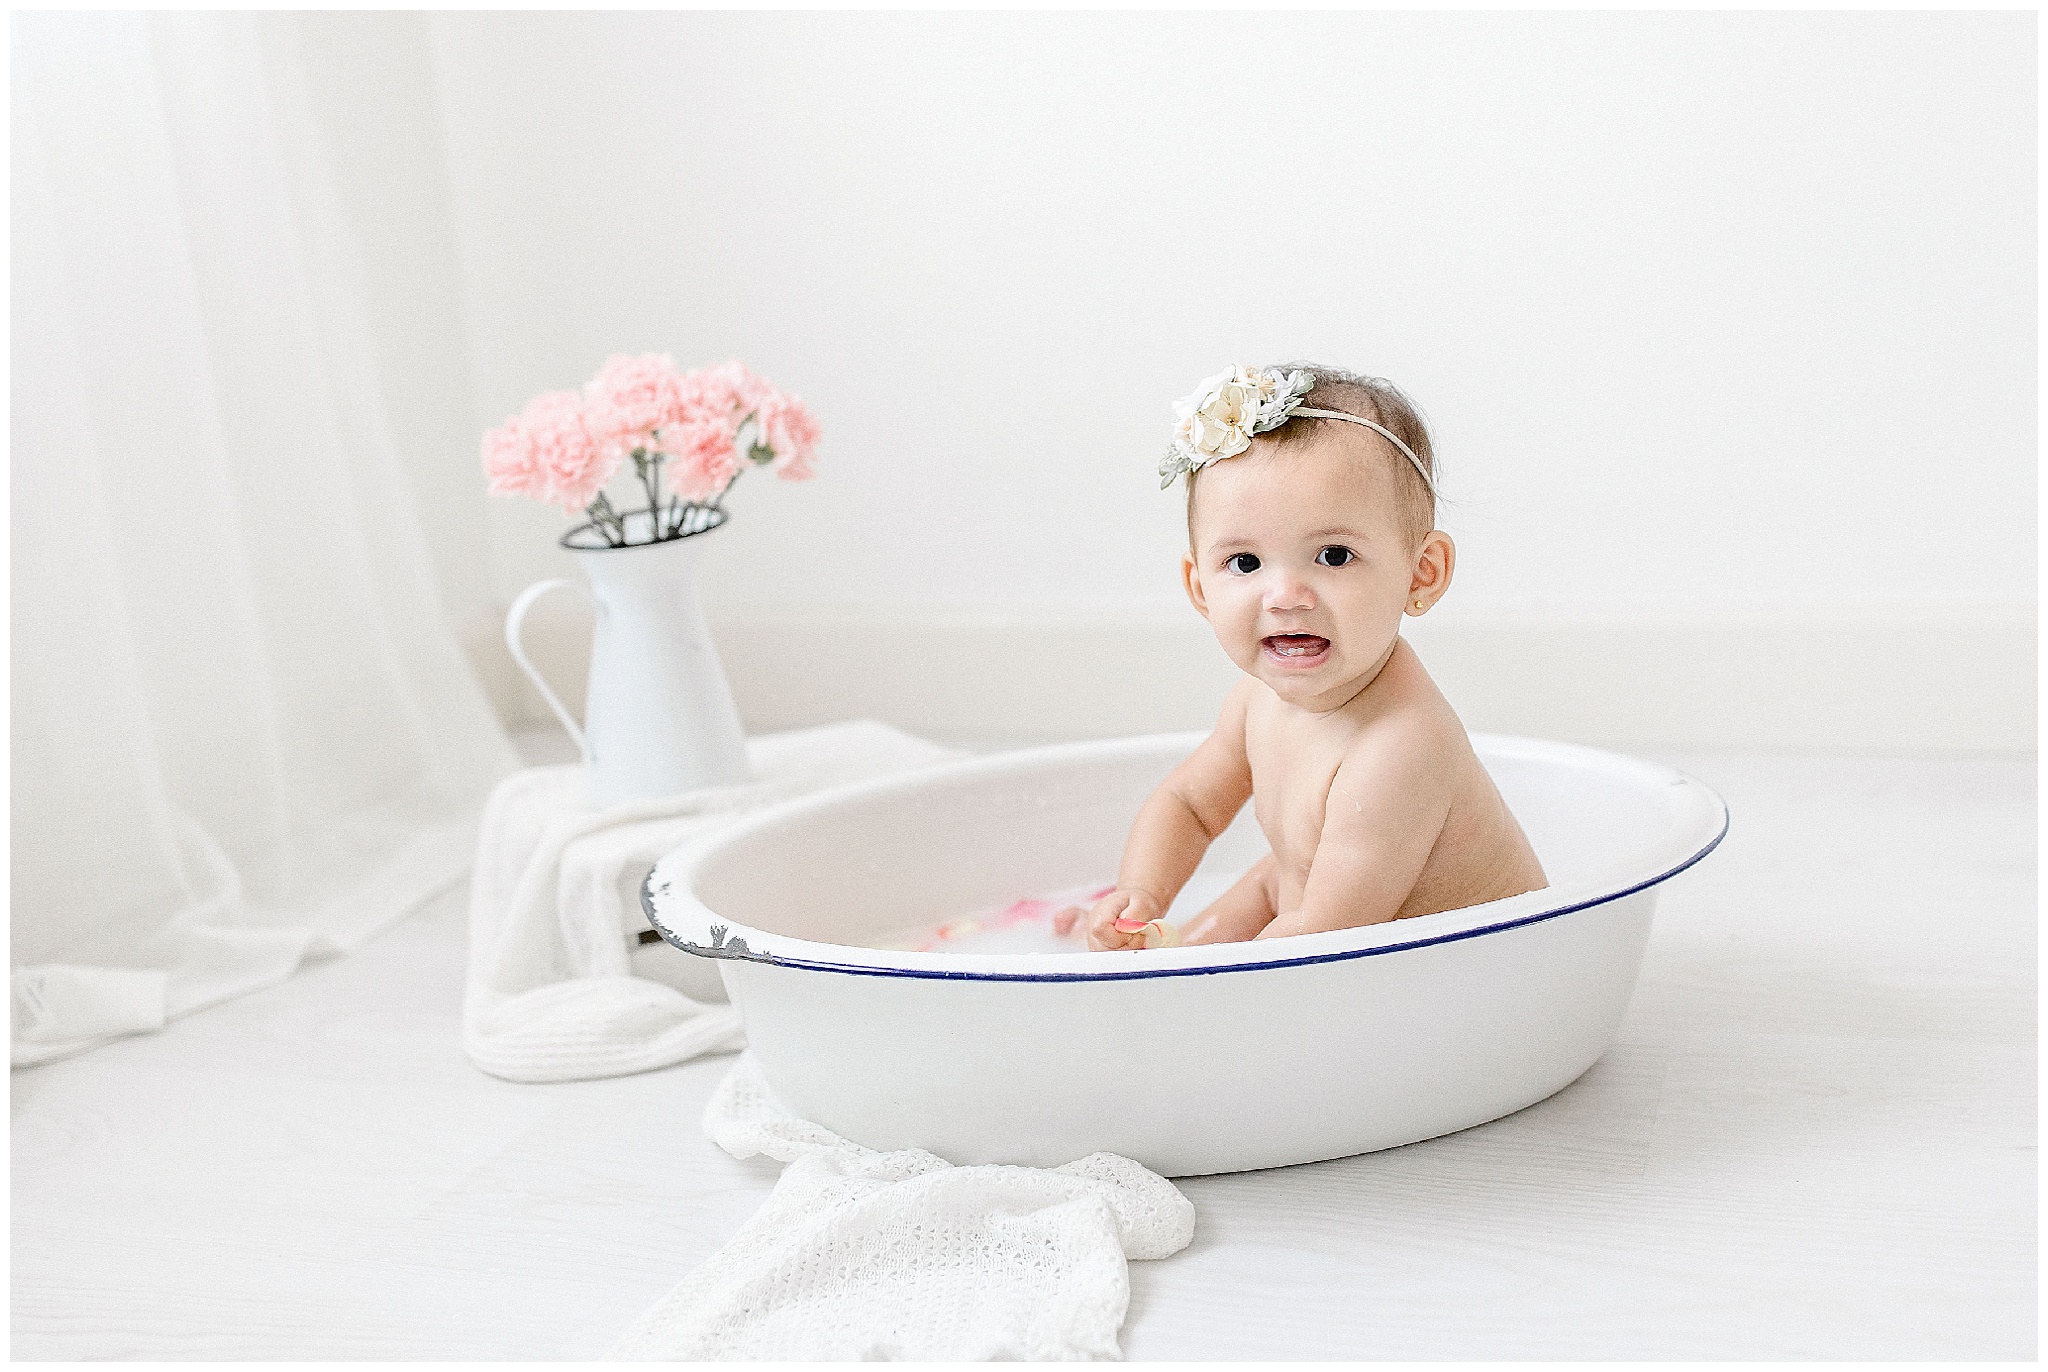 Baby girl smiles during a milk bath. Photos by Ivanna Vidal Photography.